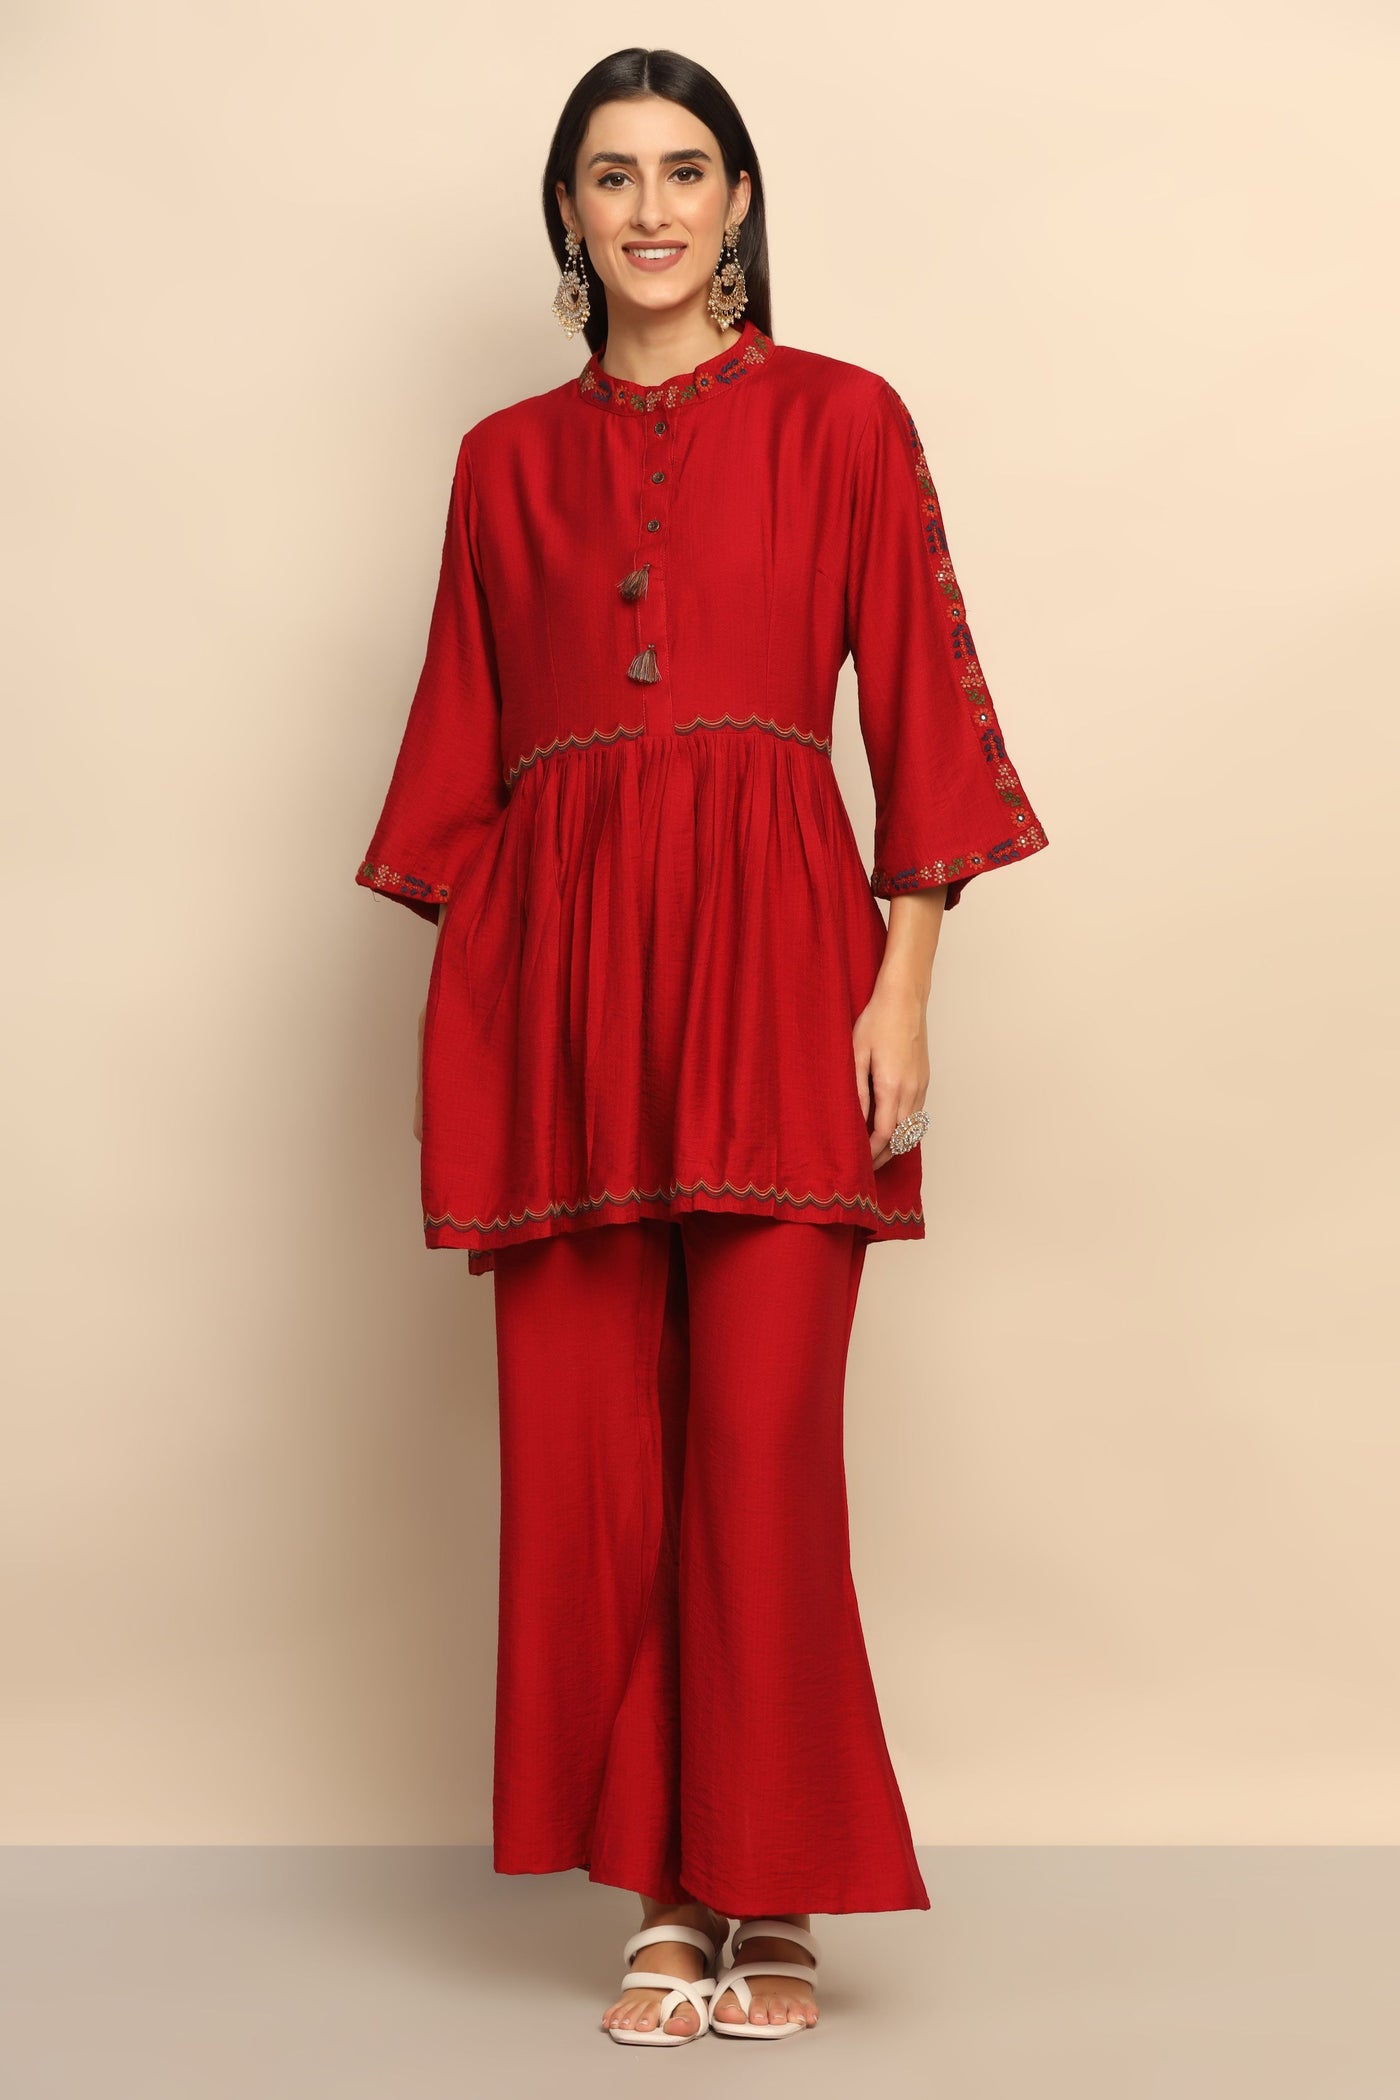 Exquisite Red Thread Work Tassel Dress - Embrace Effortless Elegance